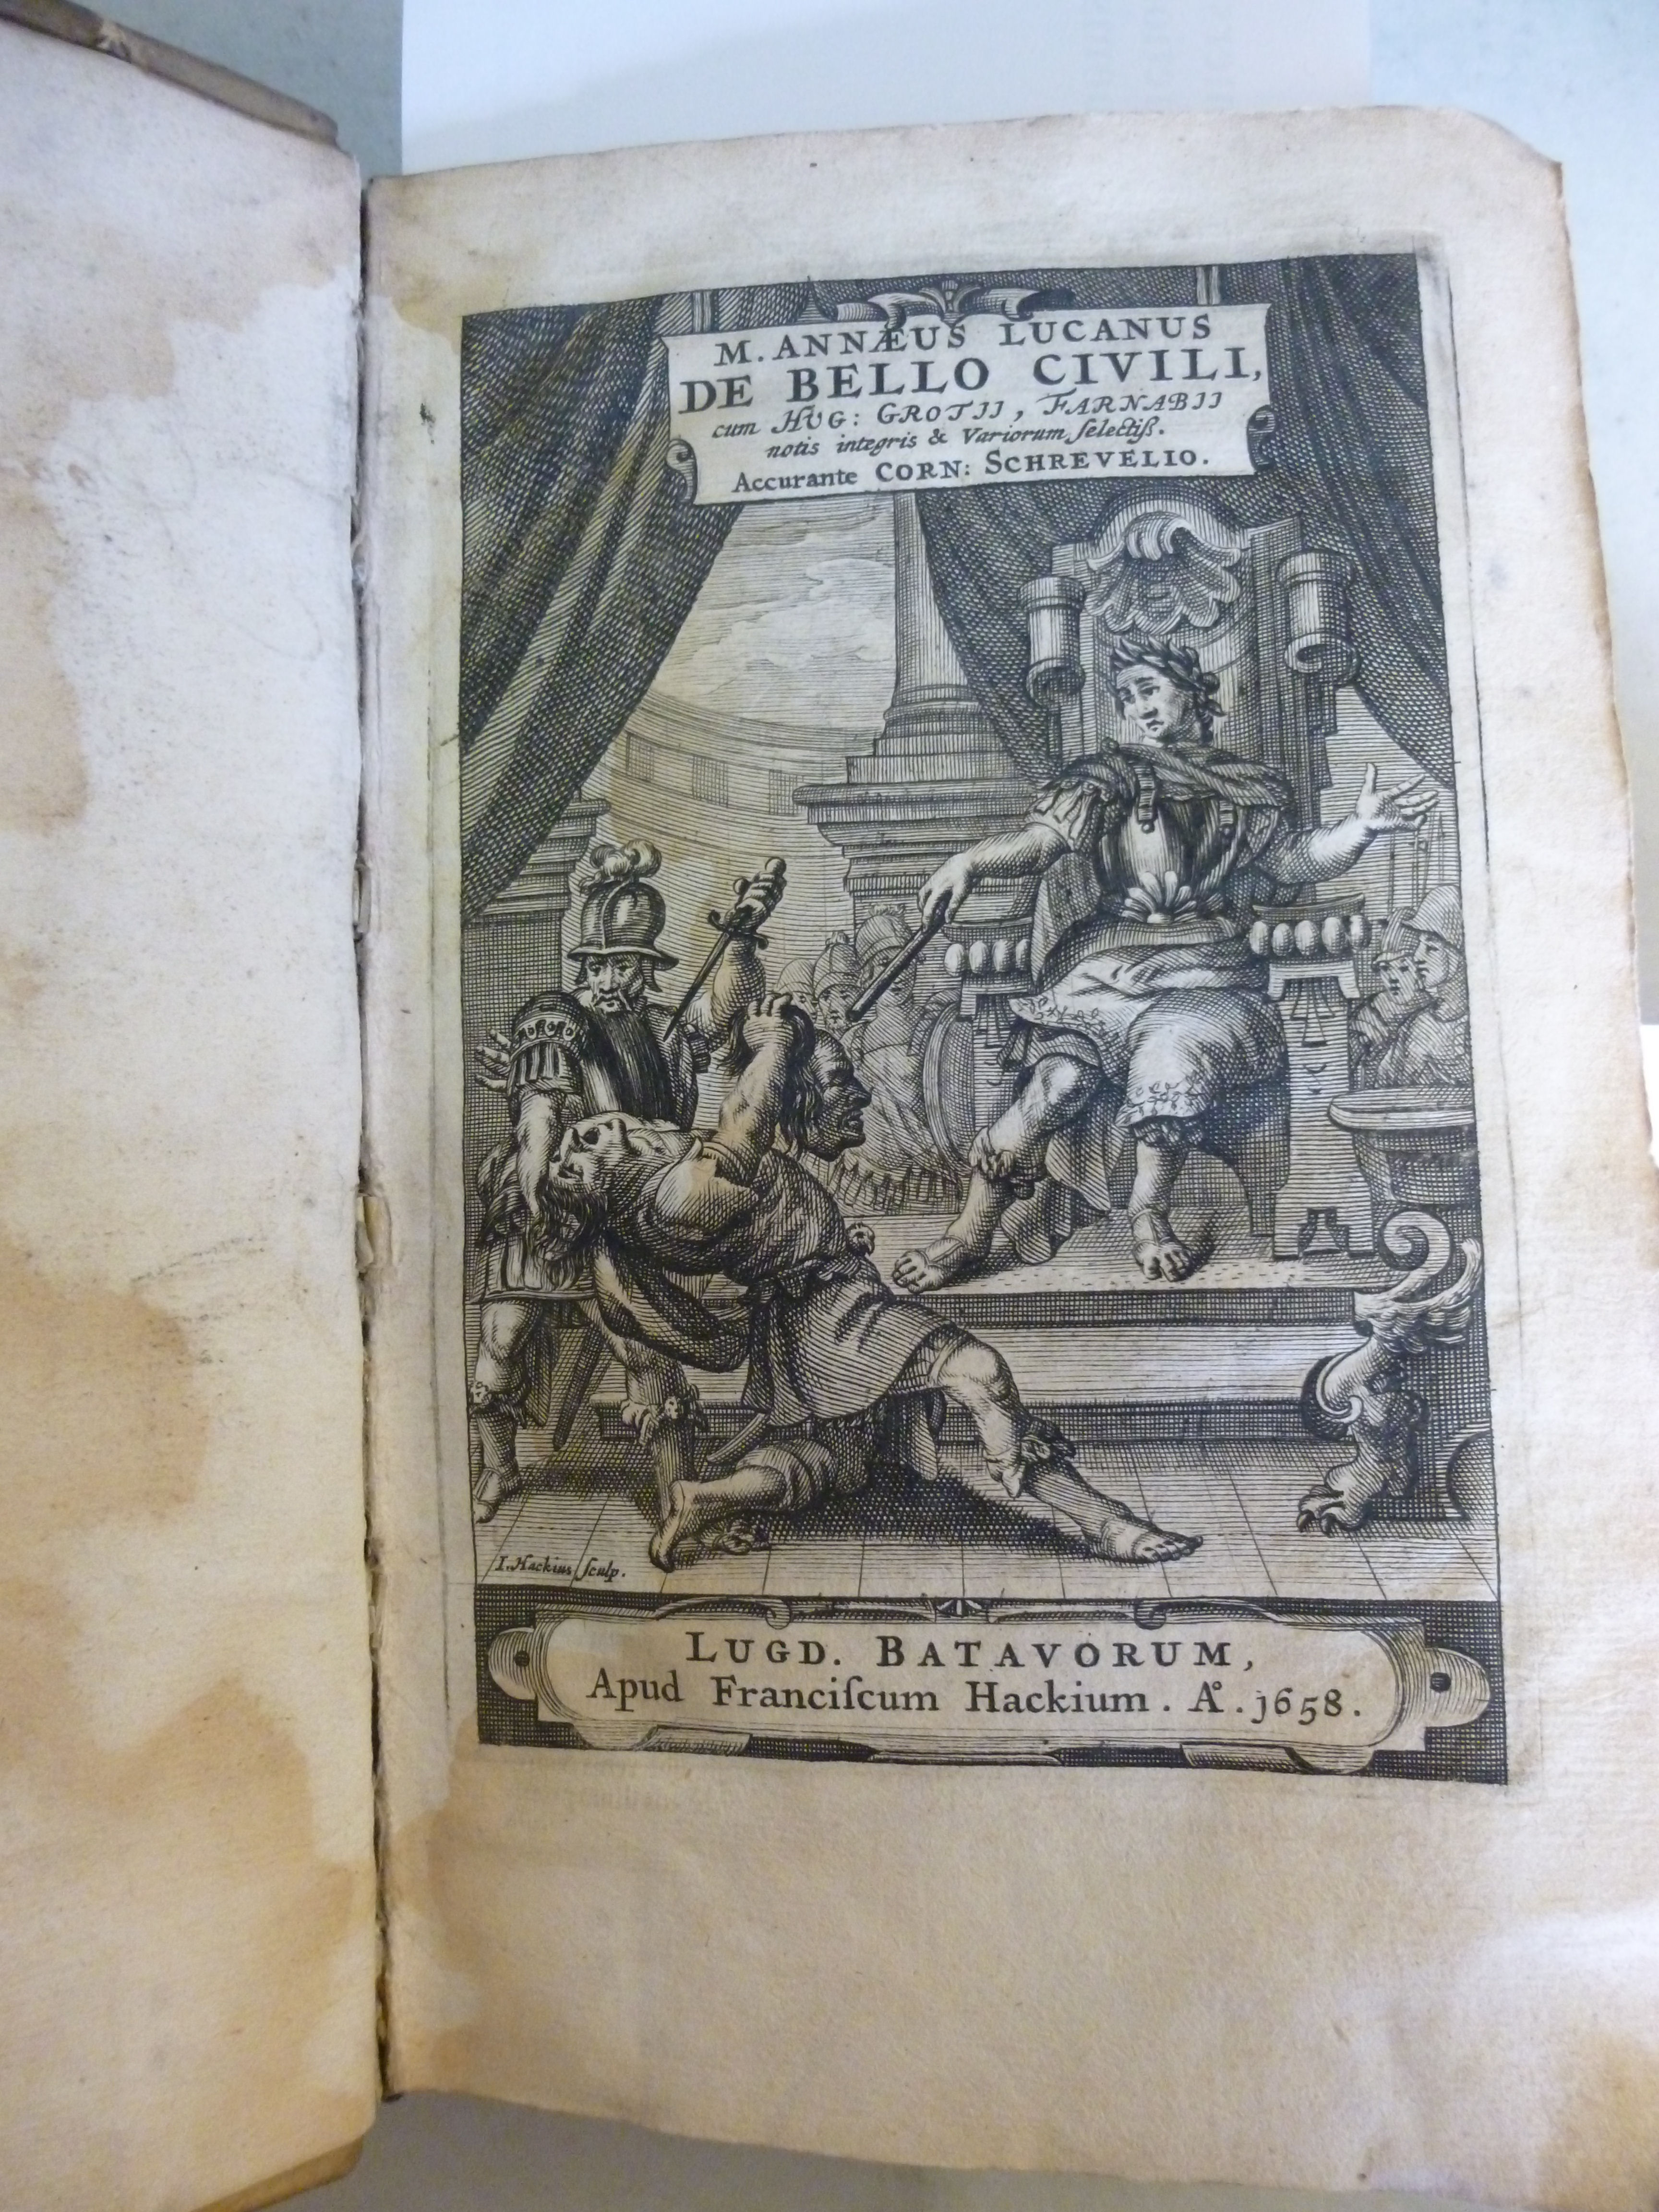 Book: 'De bello civili/M. Annaeus Lucanu - Image 2 of 8